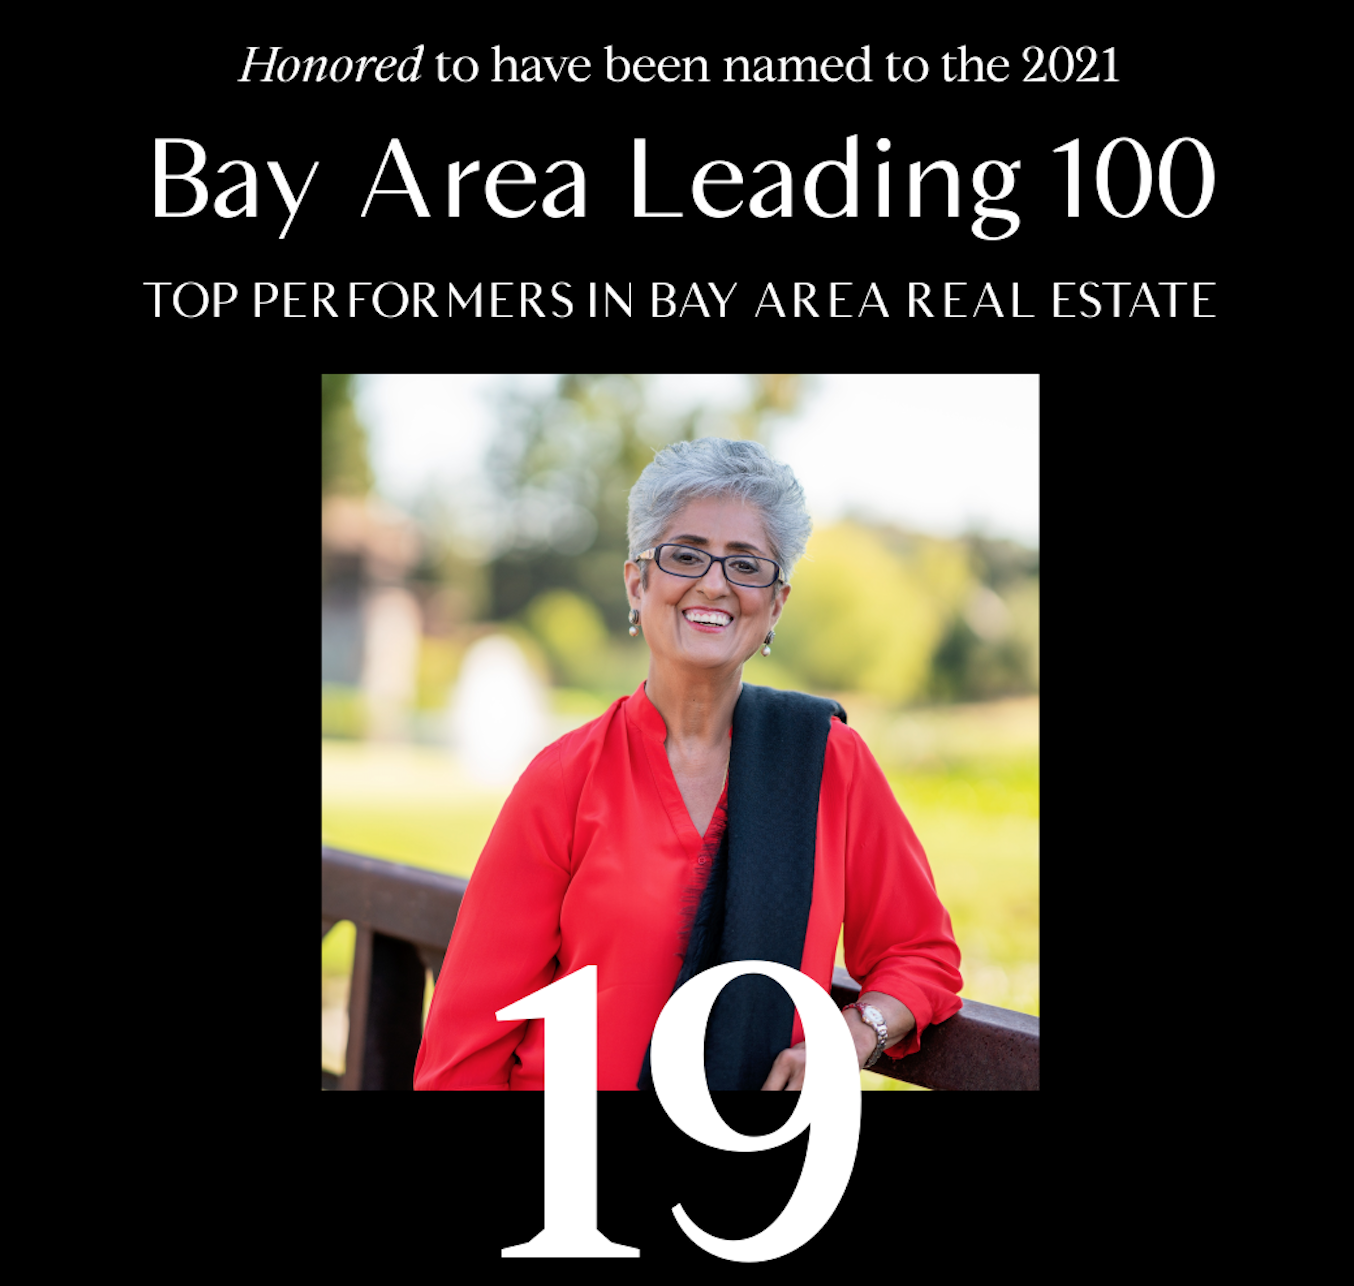 Bay Area Leading 100